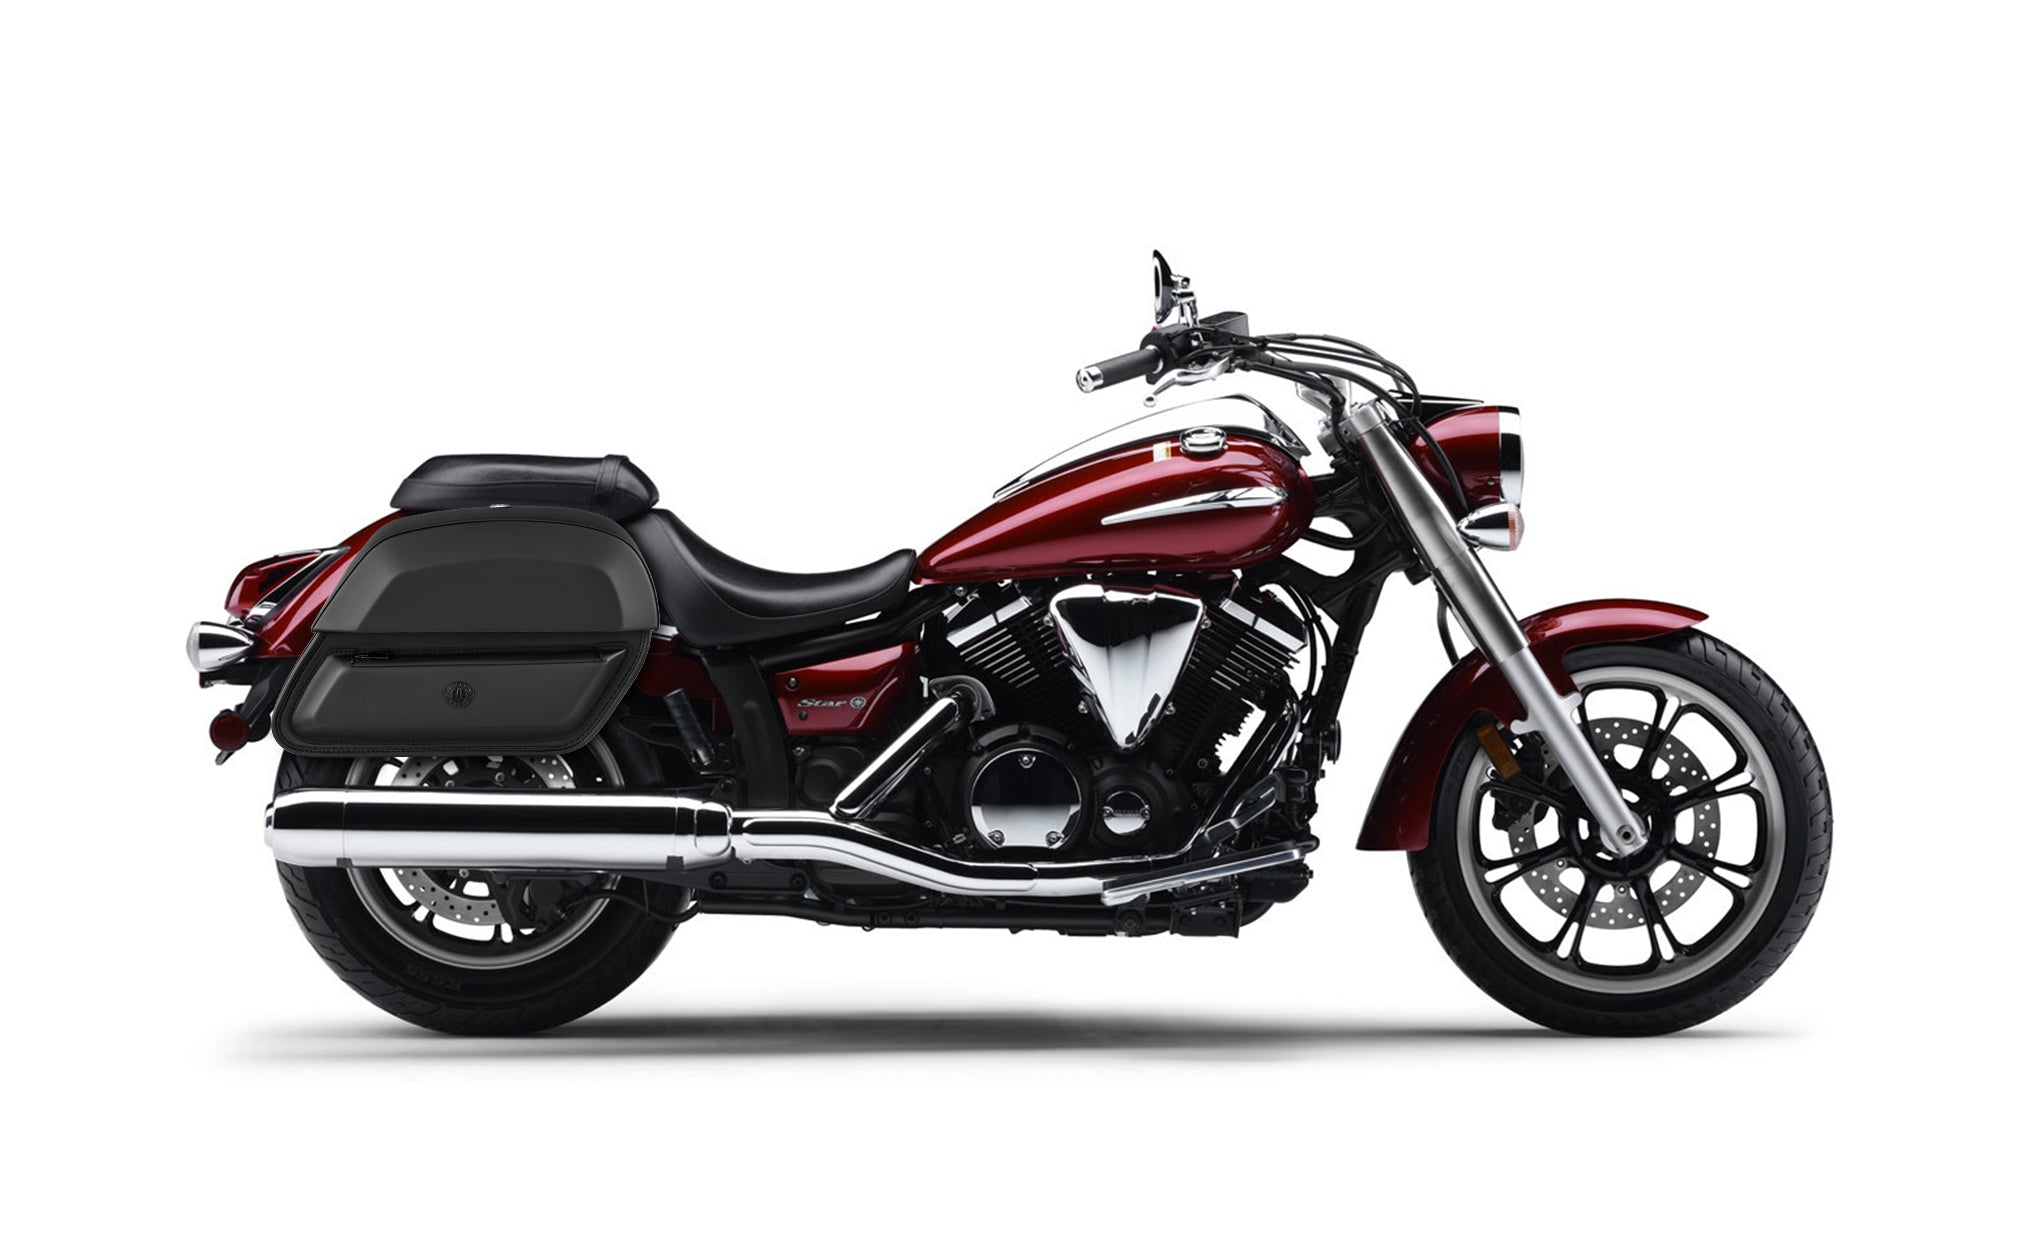 28L - Wraith Medium Yamaha V Star 950 Leather Motorcycle Saddlebags BAG on Bike View @expand